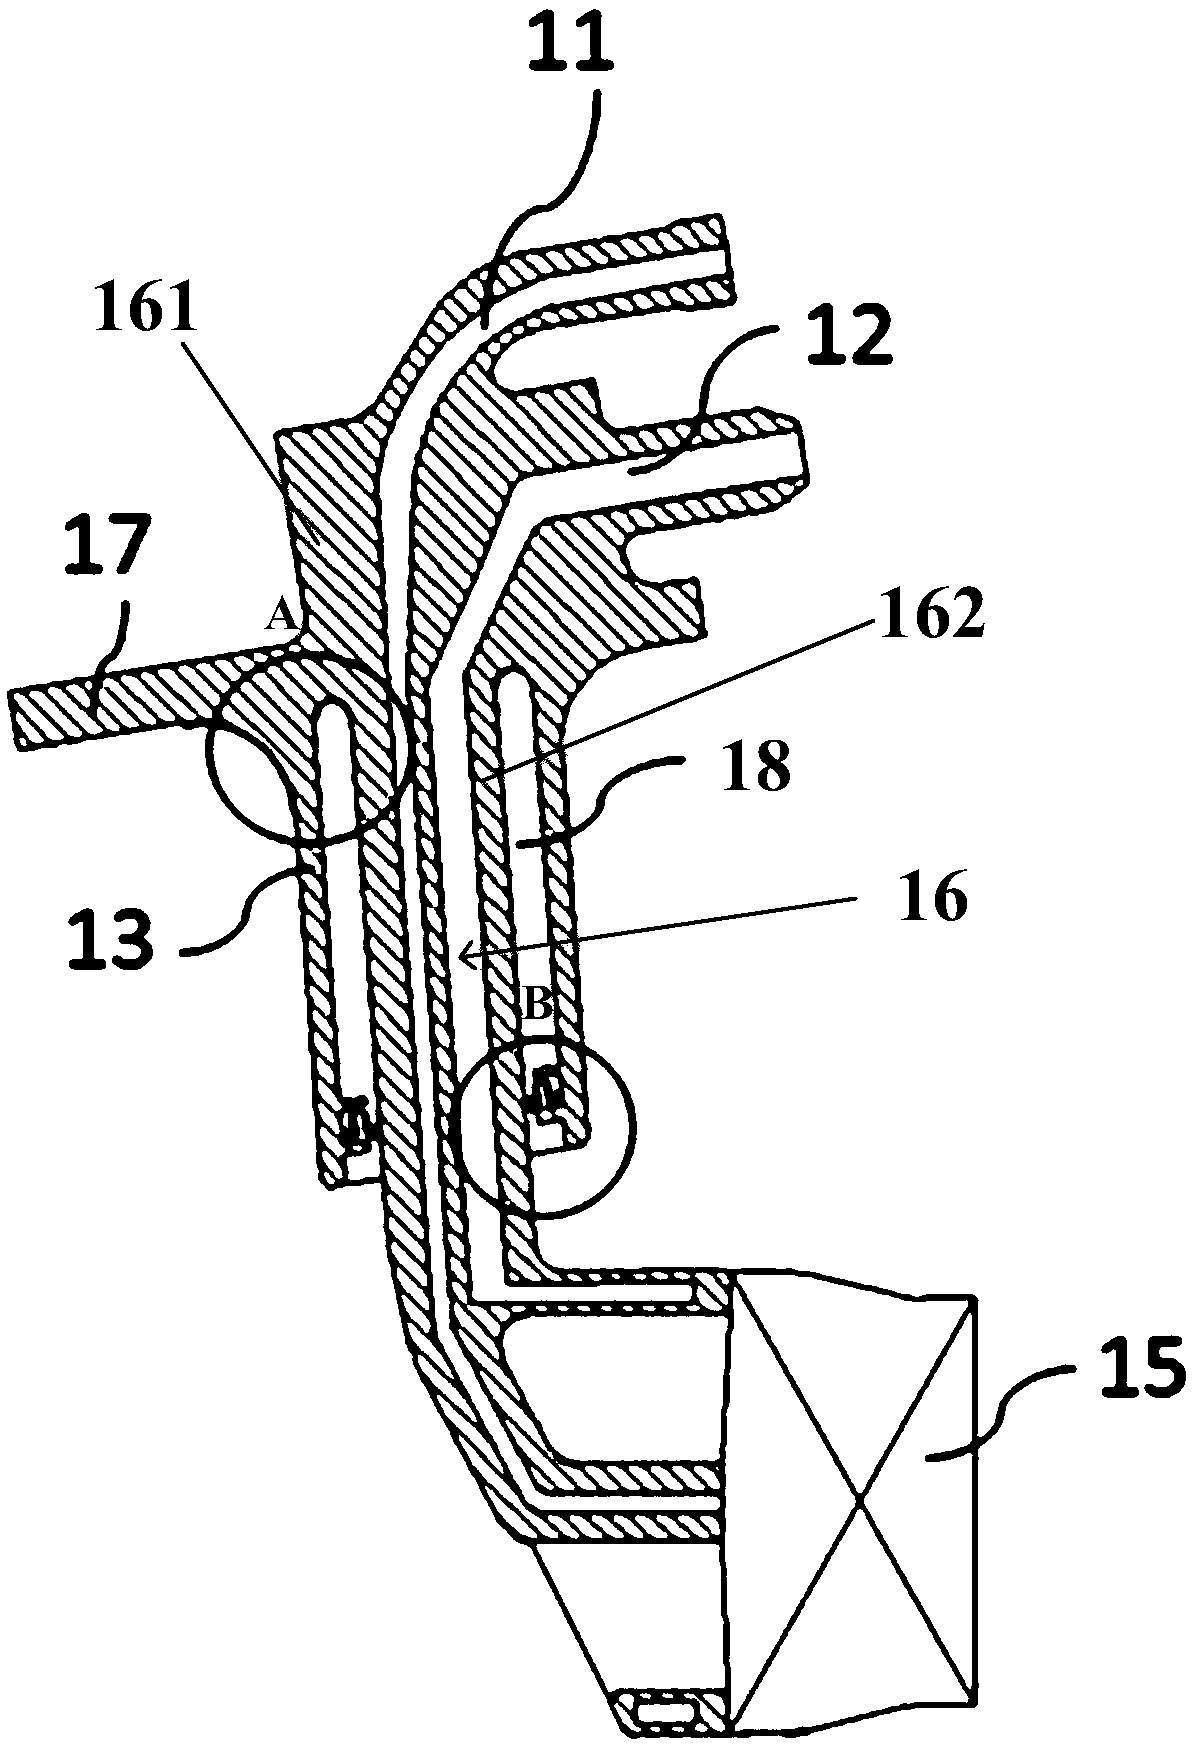 Aero-engine fuel nozzle structure